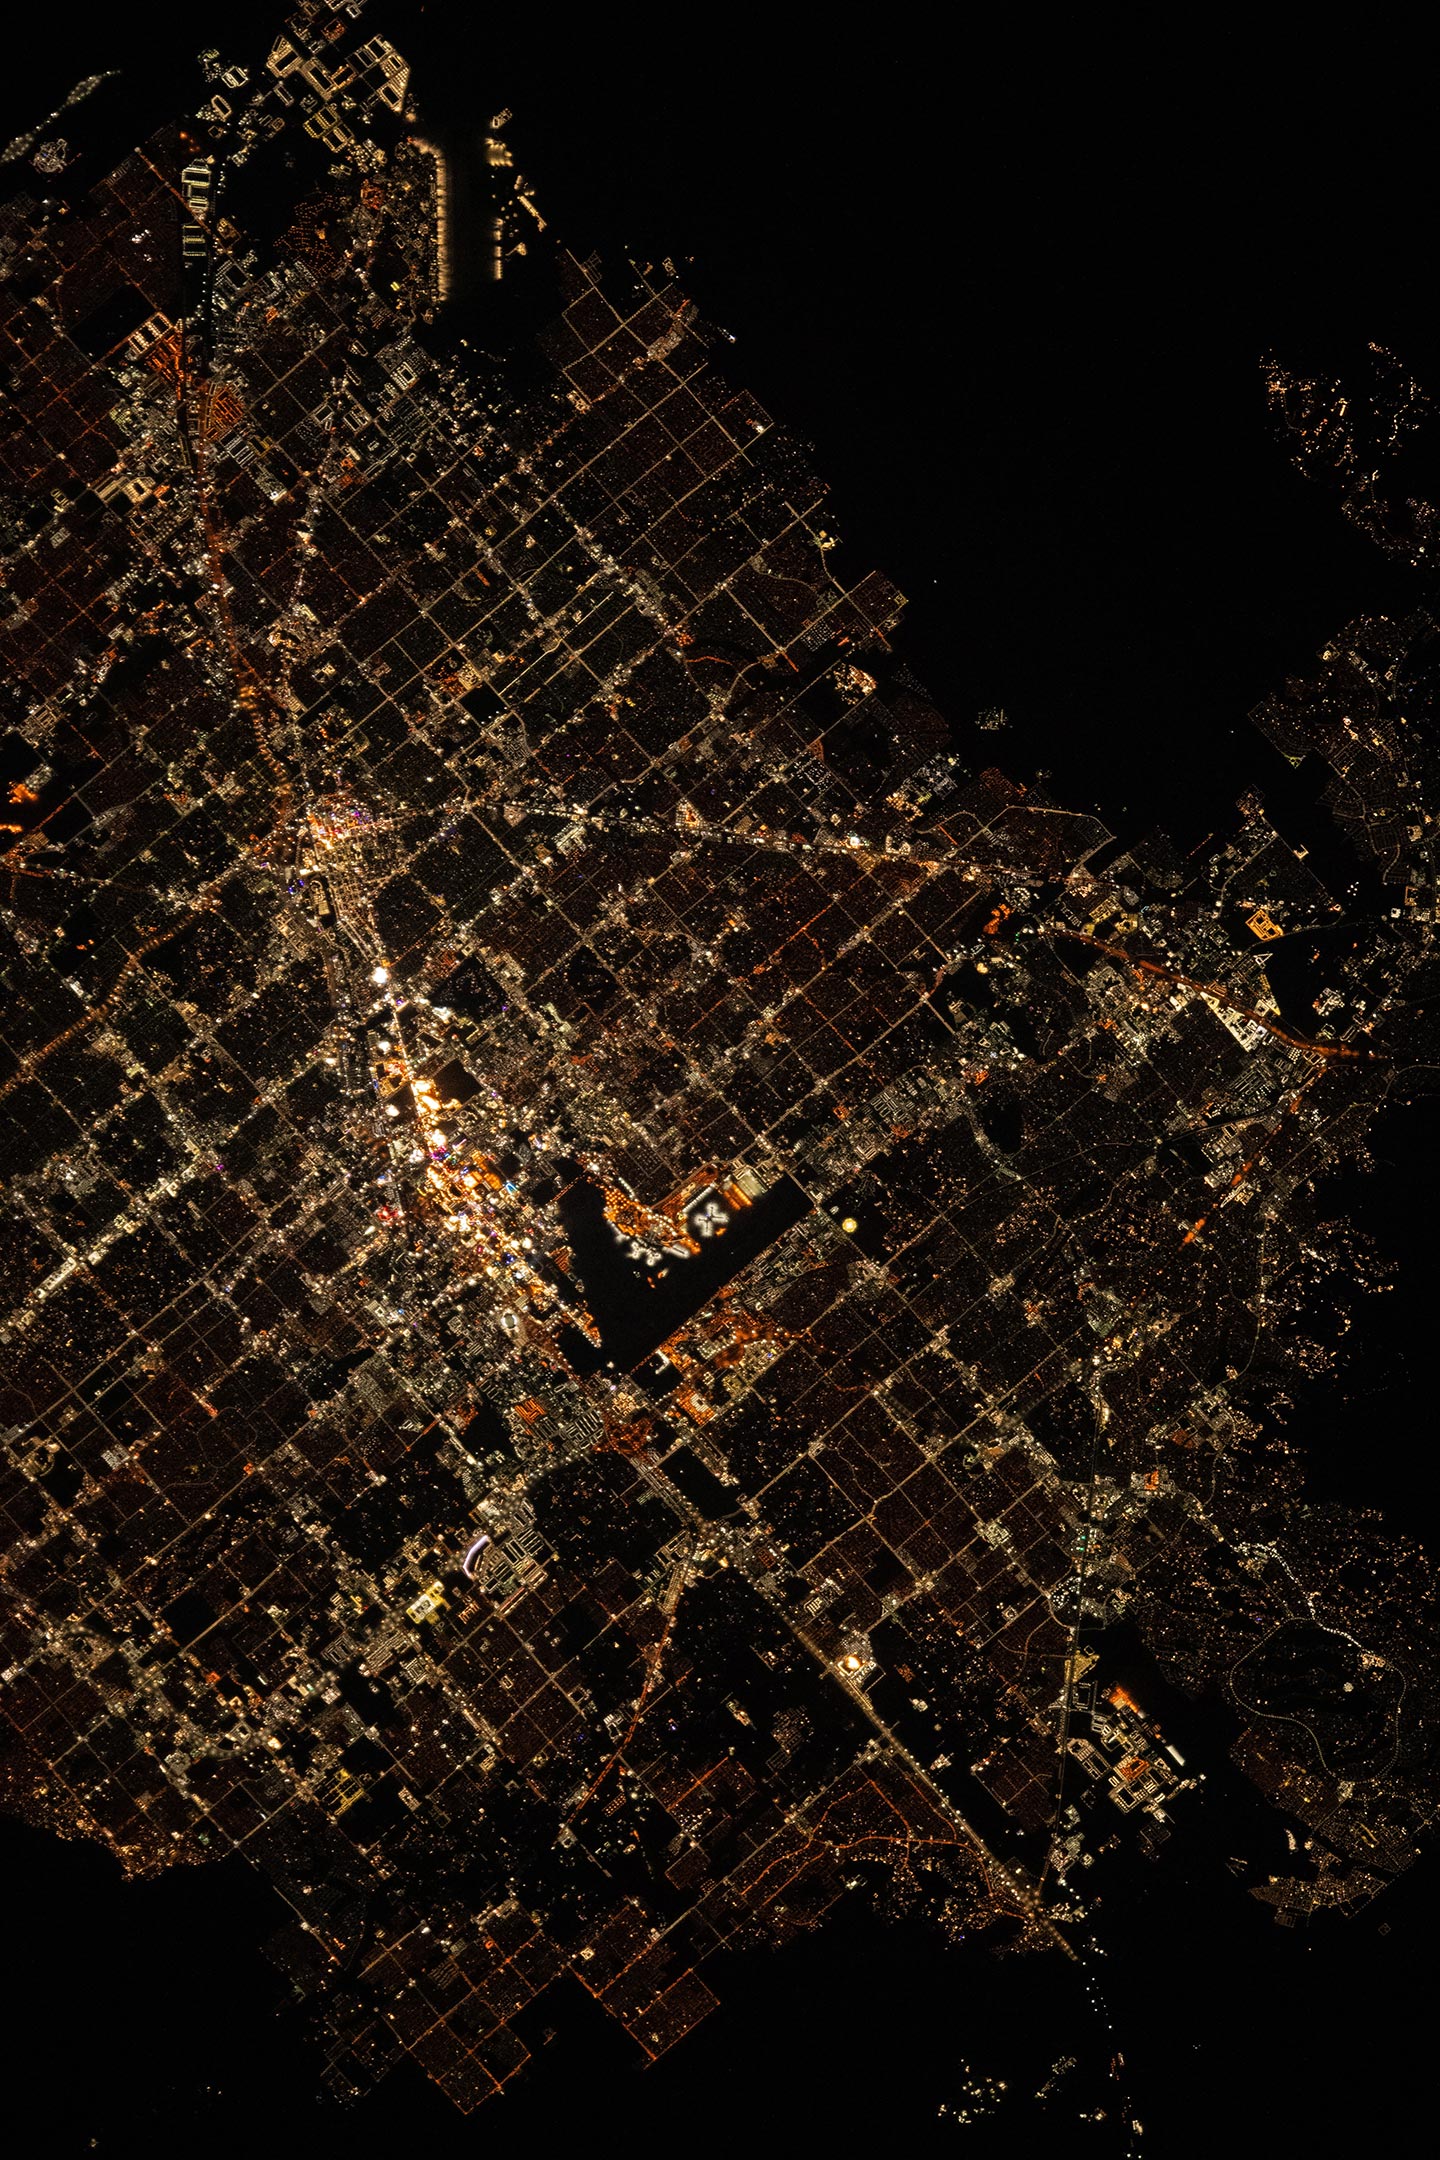 Las-Vegas-Night-Lights-From-Space-Station.jpg